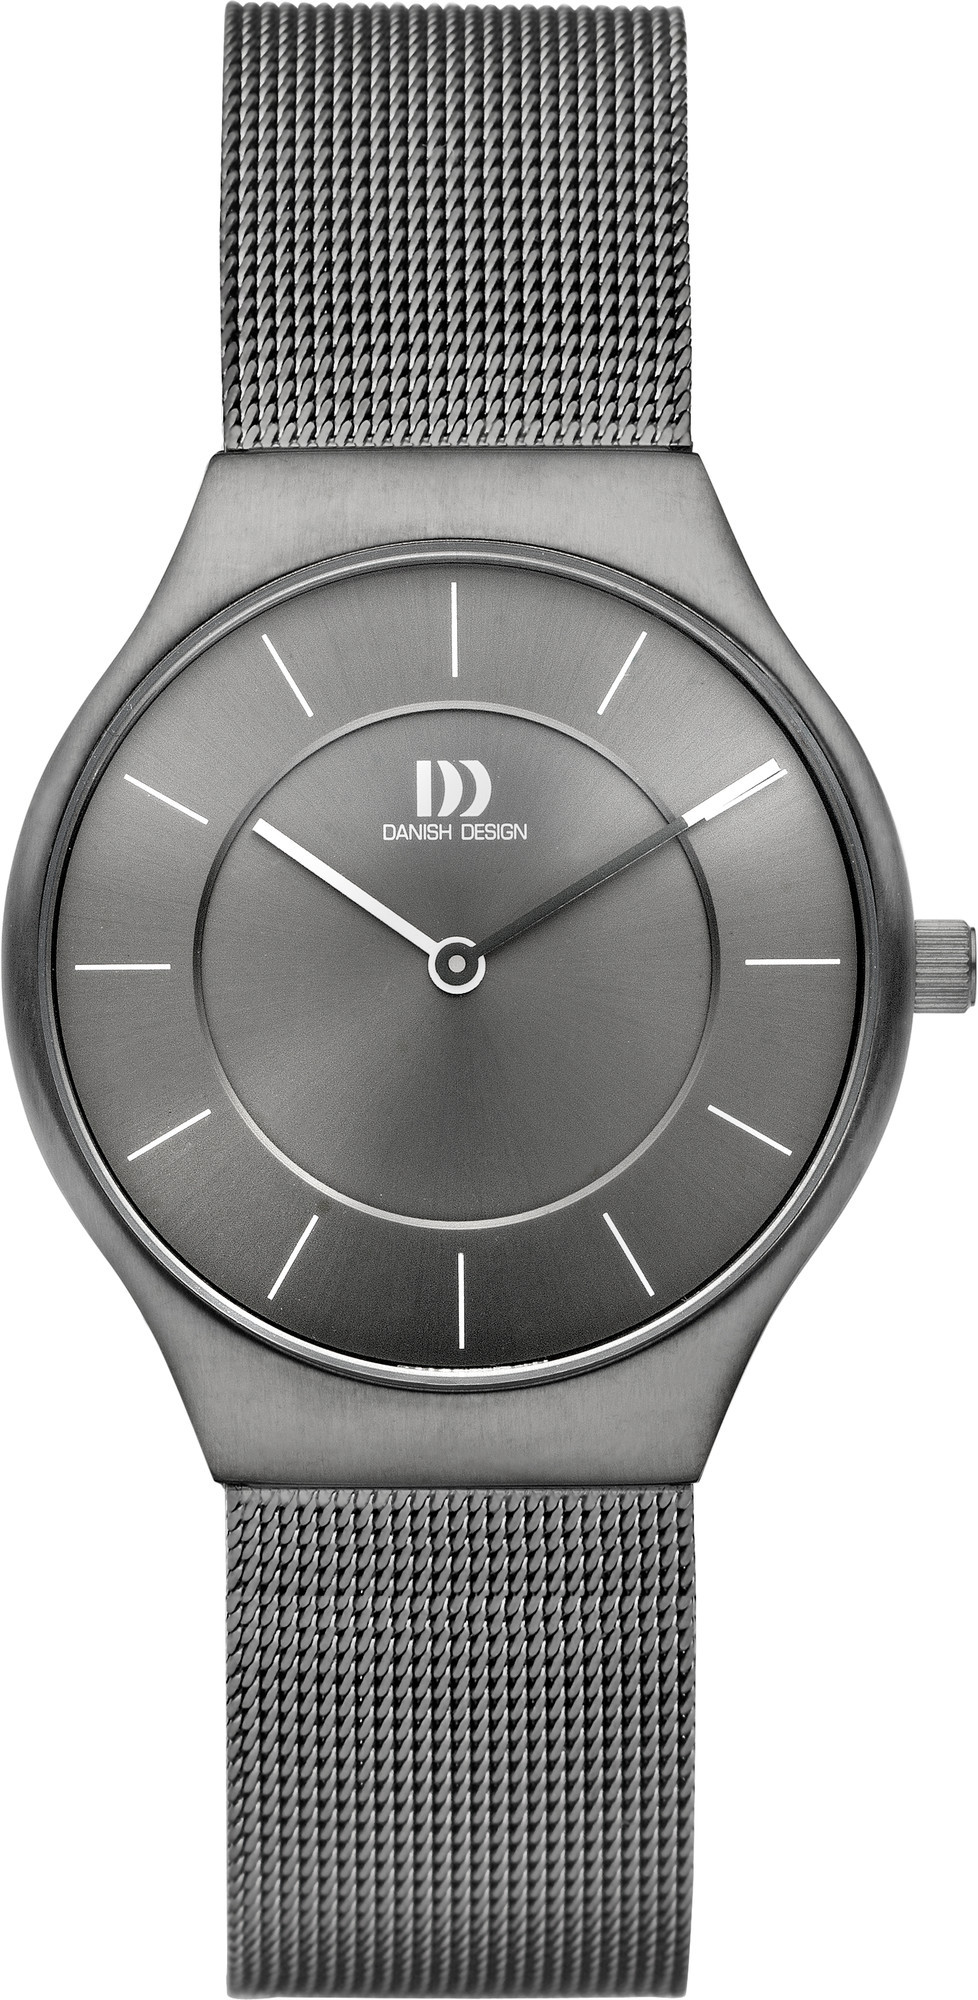 Danish Design Horloge 34 mm Stainless Steel IV66Q1259 1